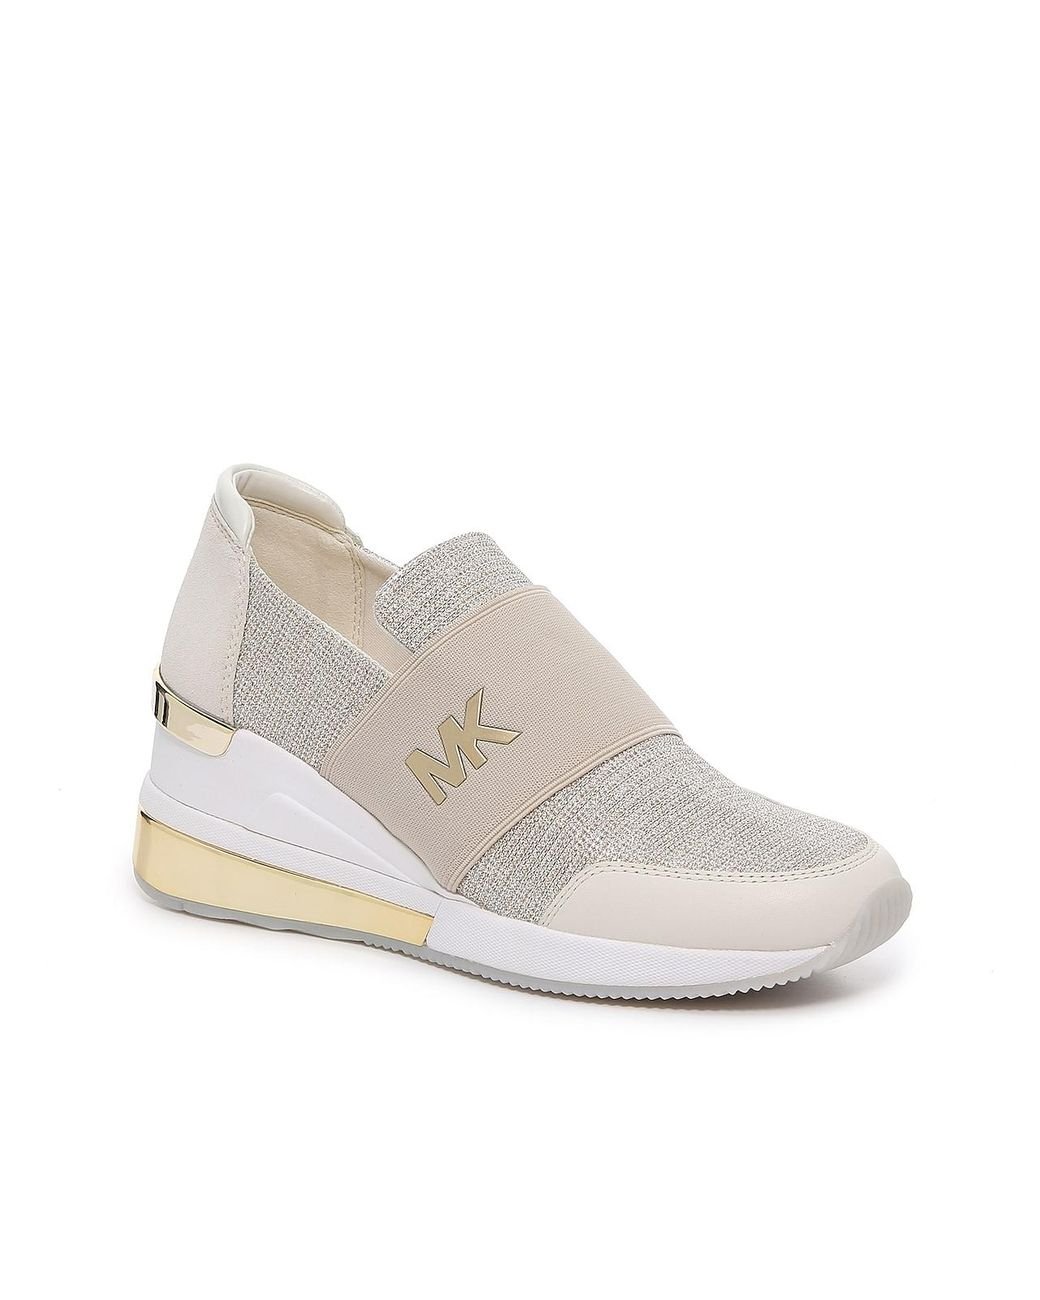 MICHAEL Michael Kors Felix Wedge Slip-on Sneaker in Beige/Gold Metallic ...